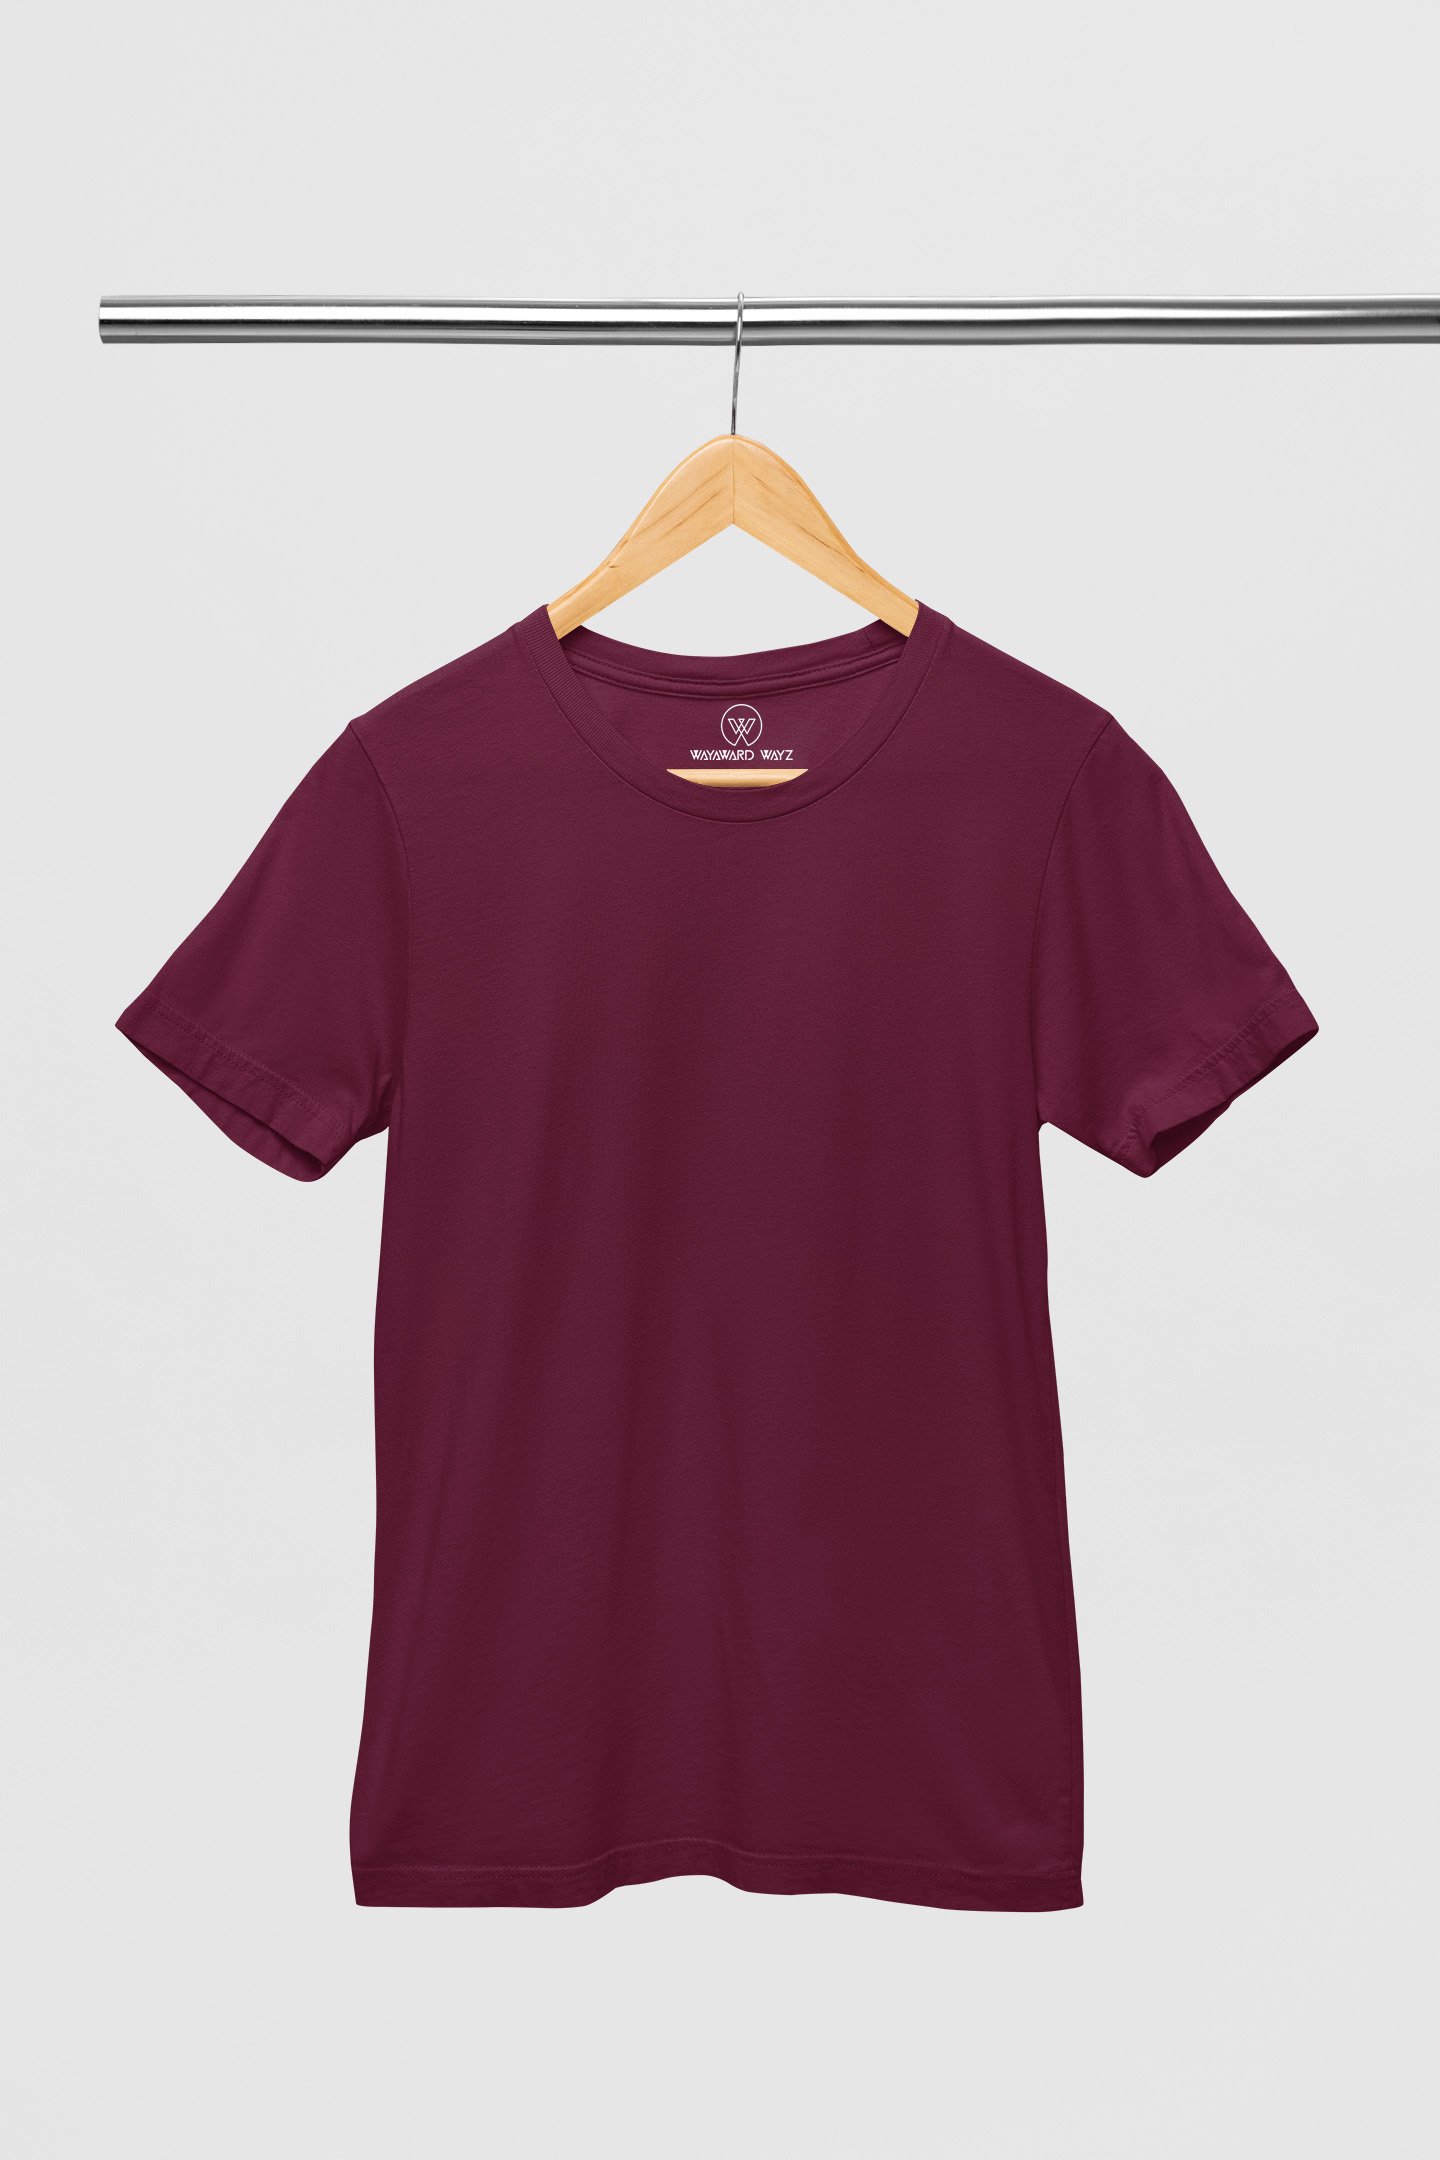 Wine T-Shirt by Wayward Wayz Front